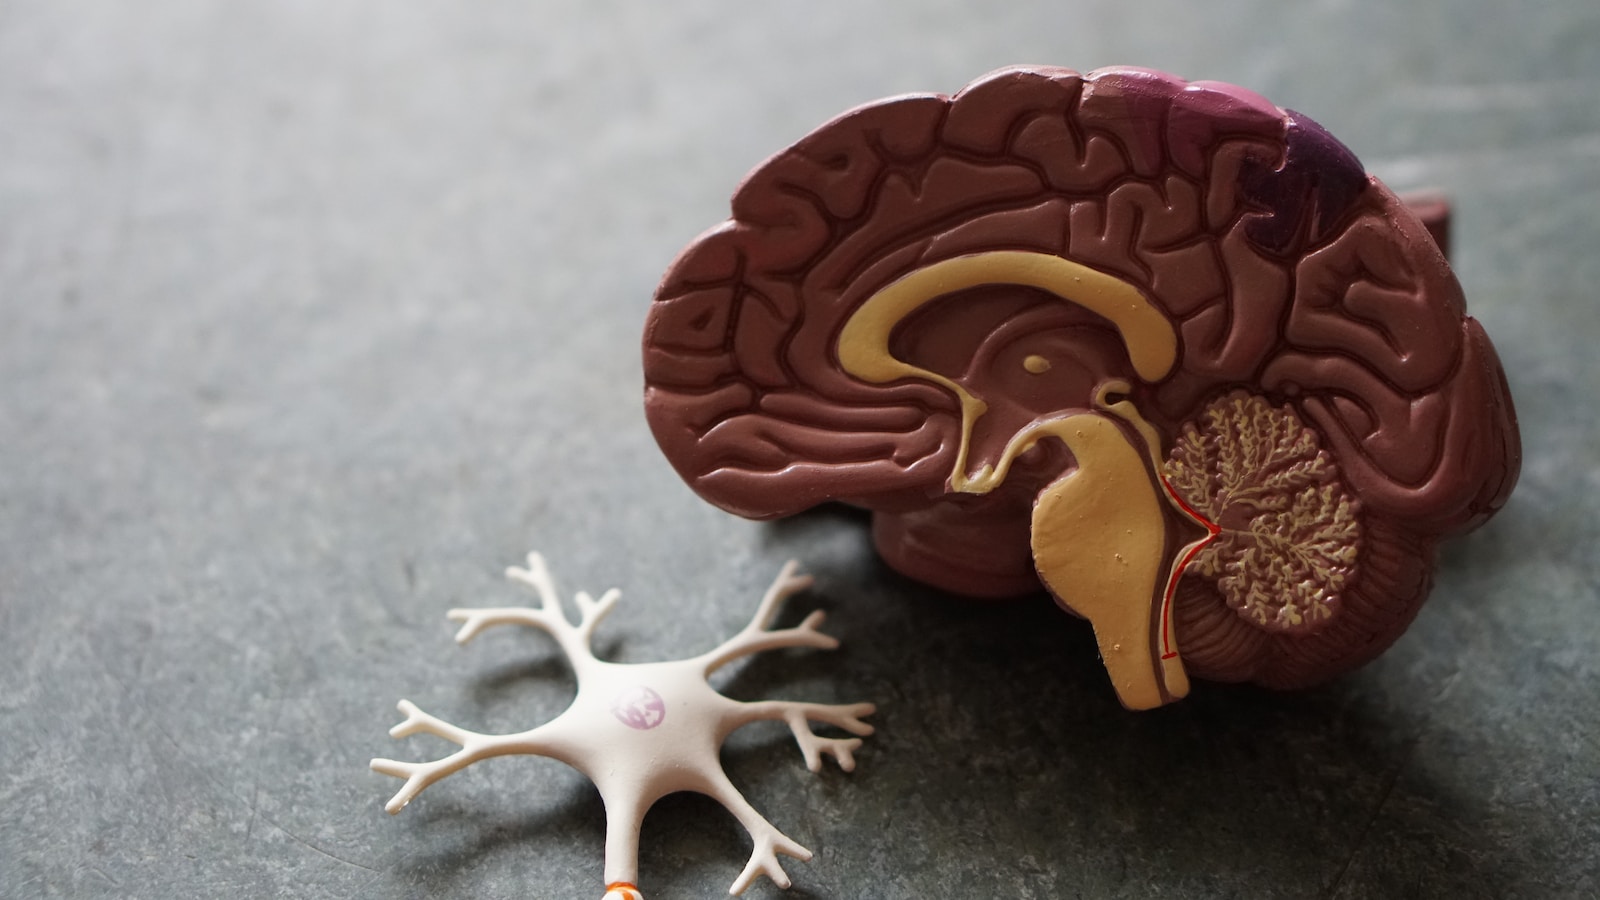 Nerve human brain toy